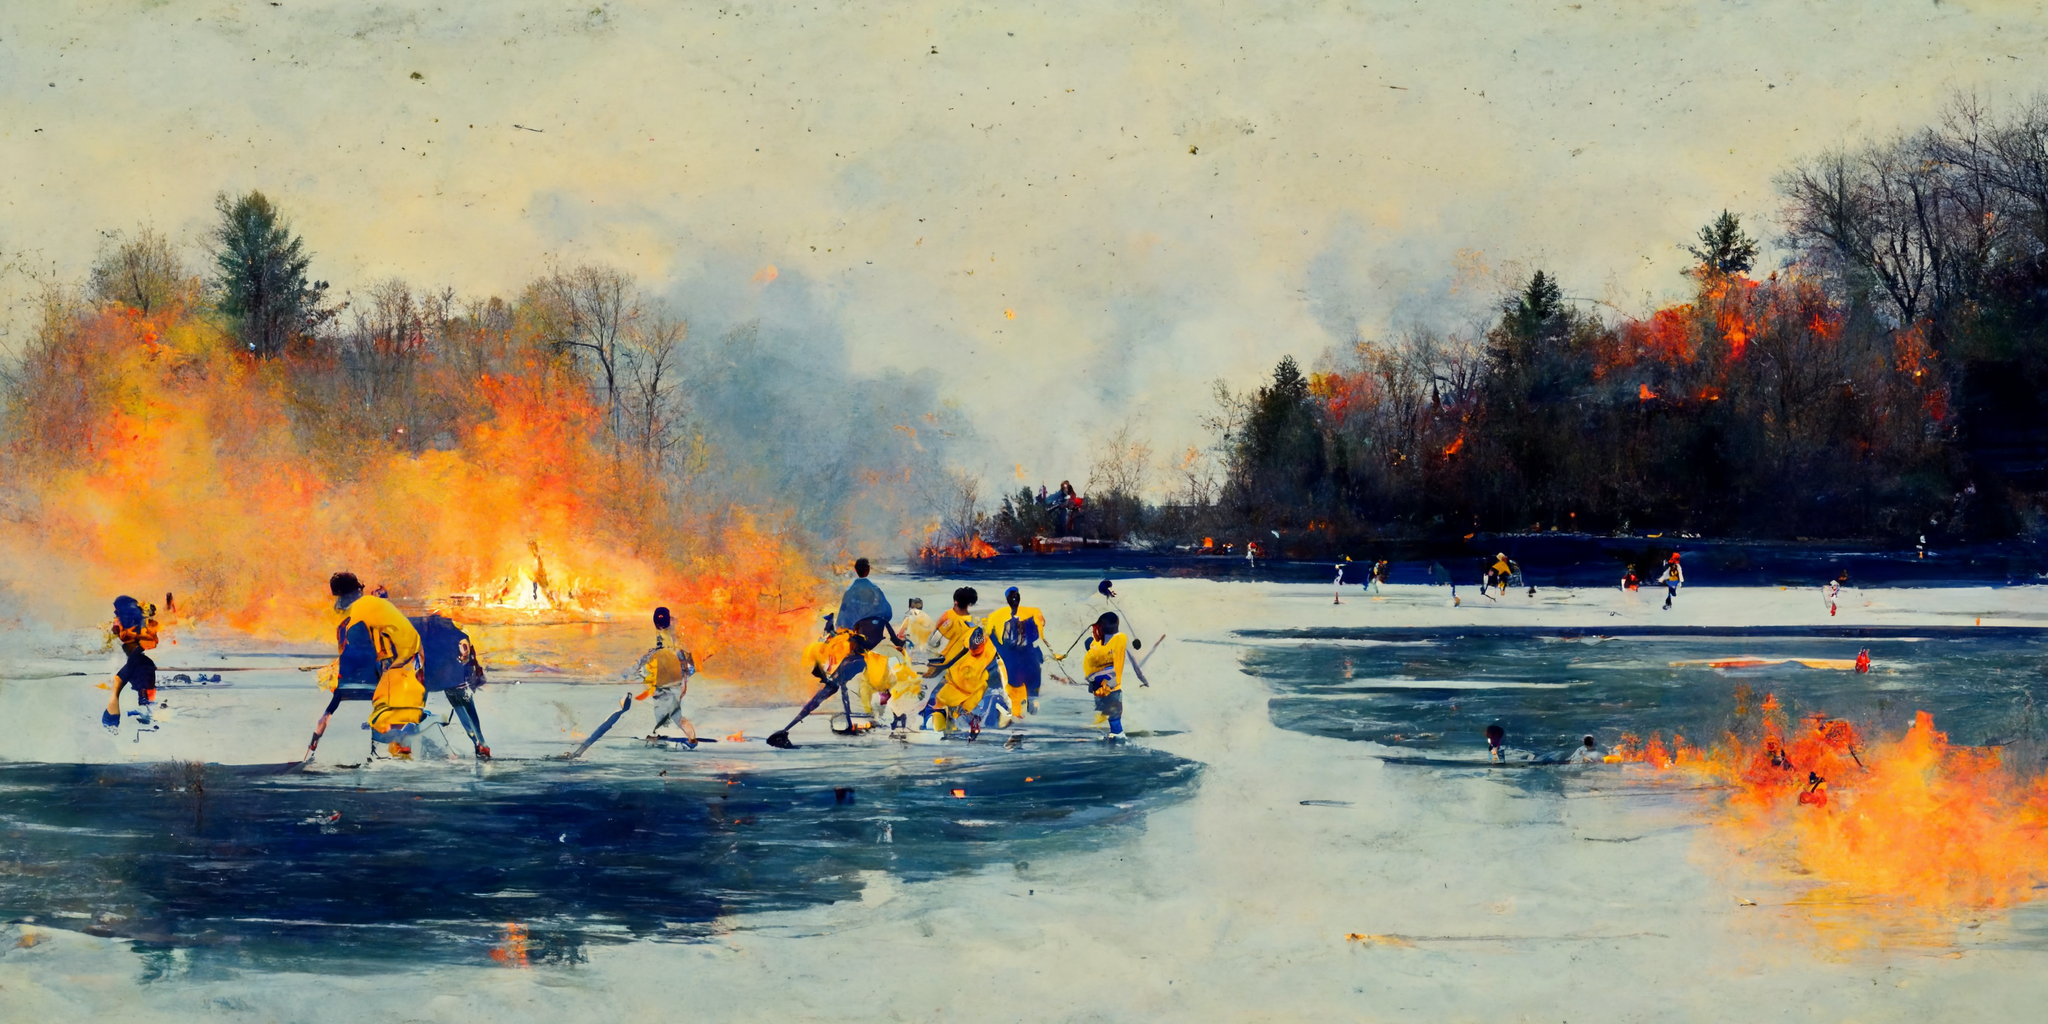 Blue’s News: Portrait of a Hockey Game Near a Lake on Fire